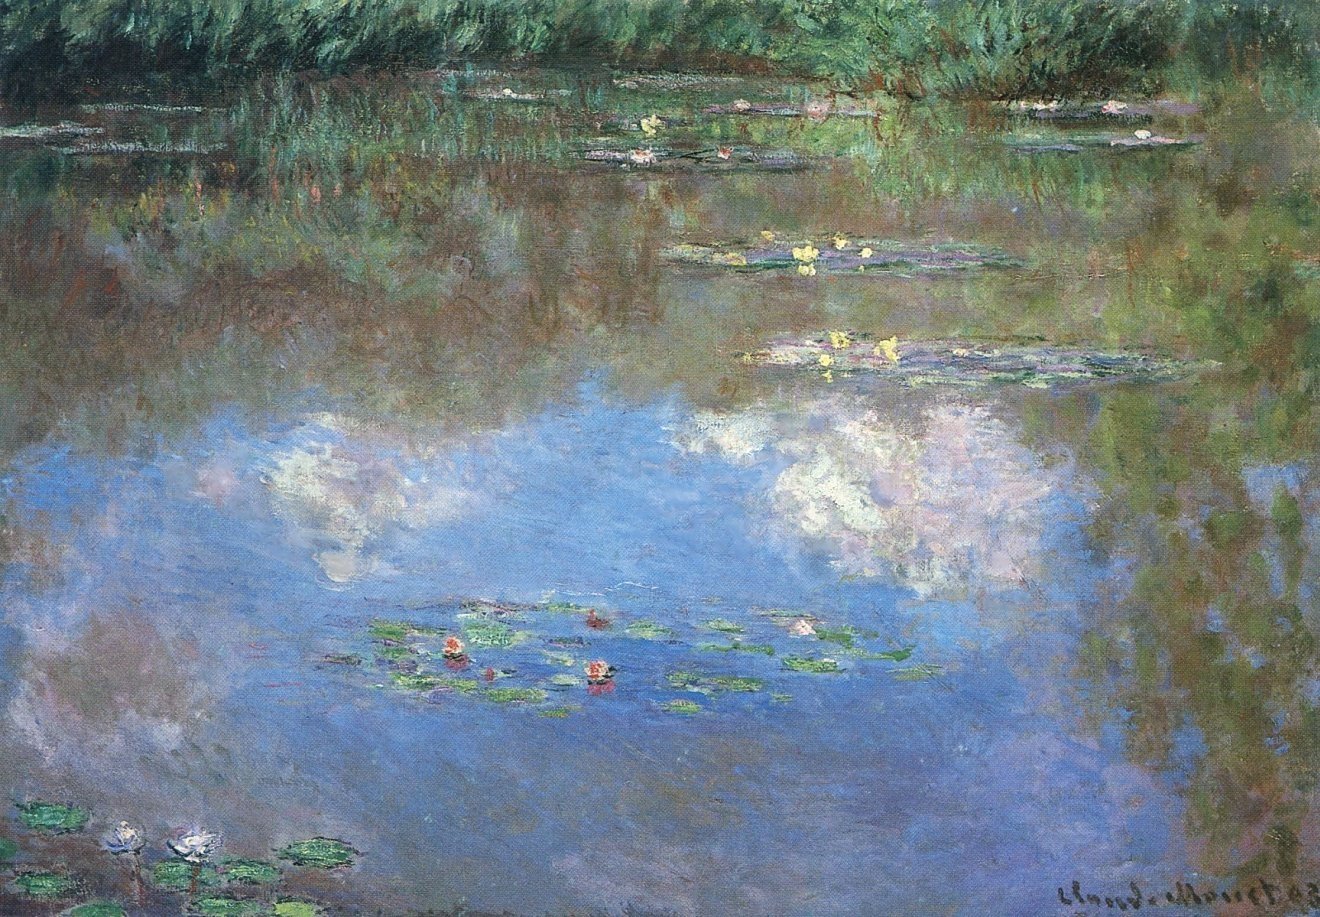 Claude+Monet-1840-1926 (922).jpg